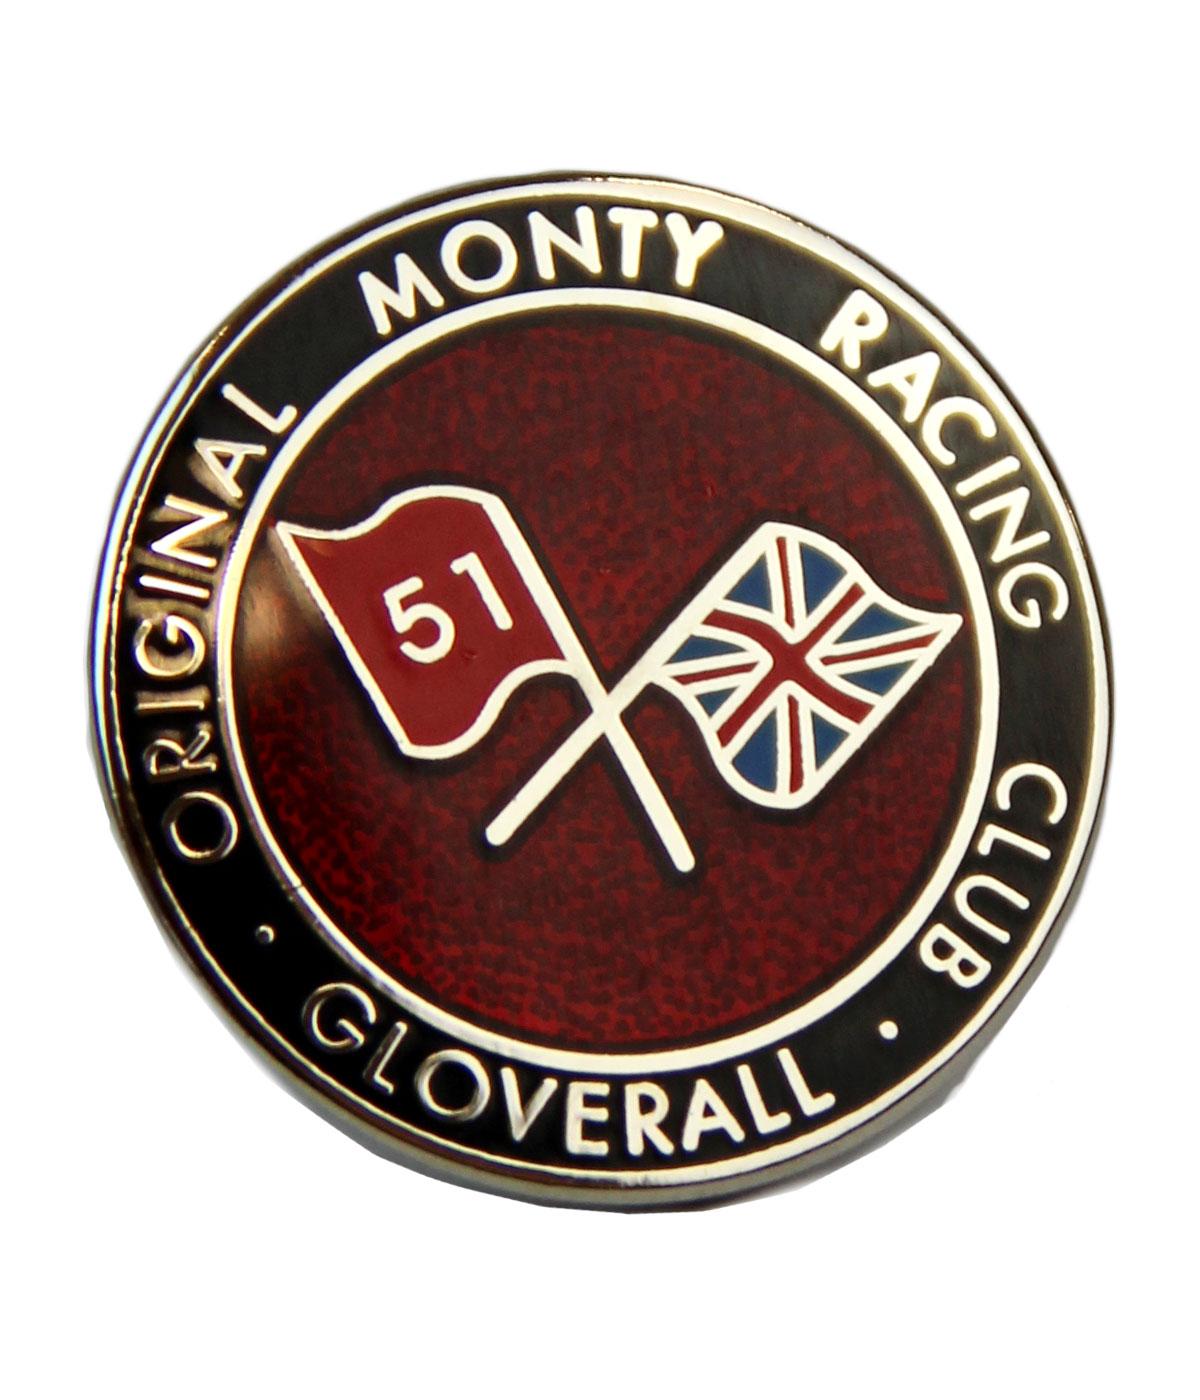 GLOVERALL Retro Original Monty Racing Club Pin